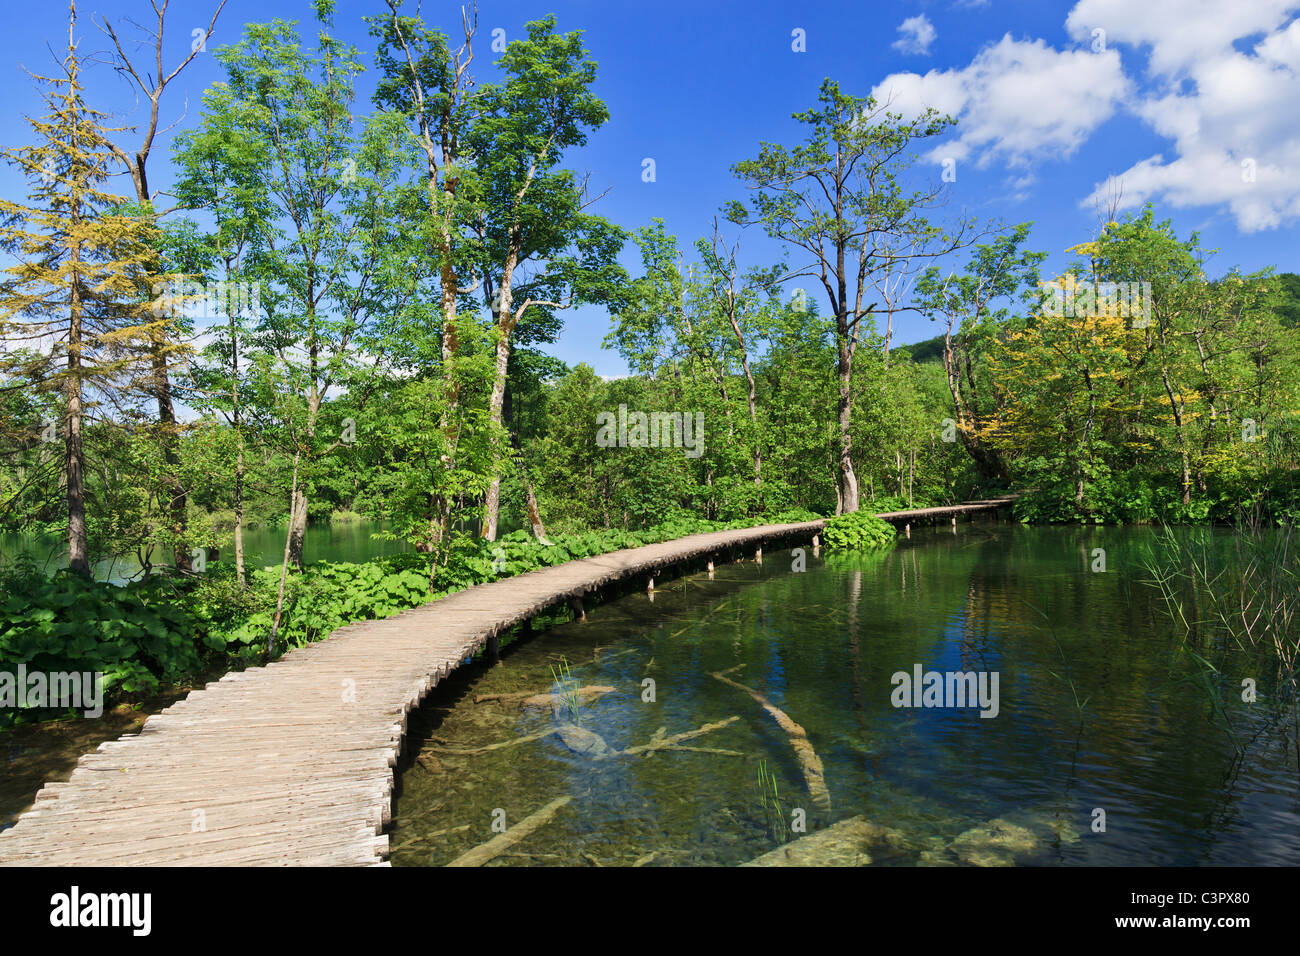 Europe, Croatia, Jezera, View of broadwalk at Plitvice Lakes National Park Stock Photo